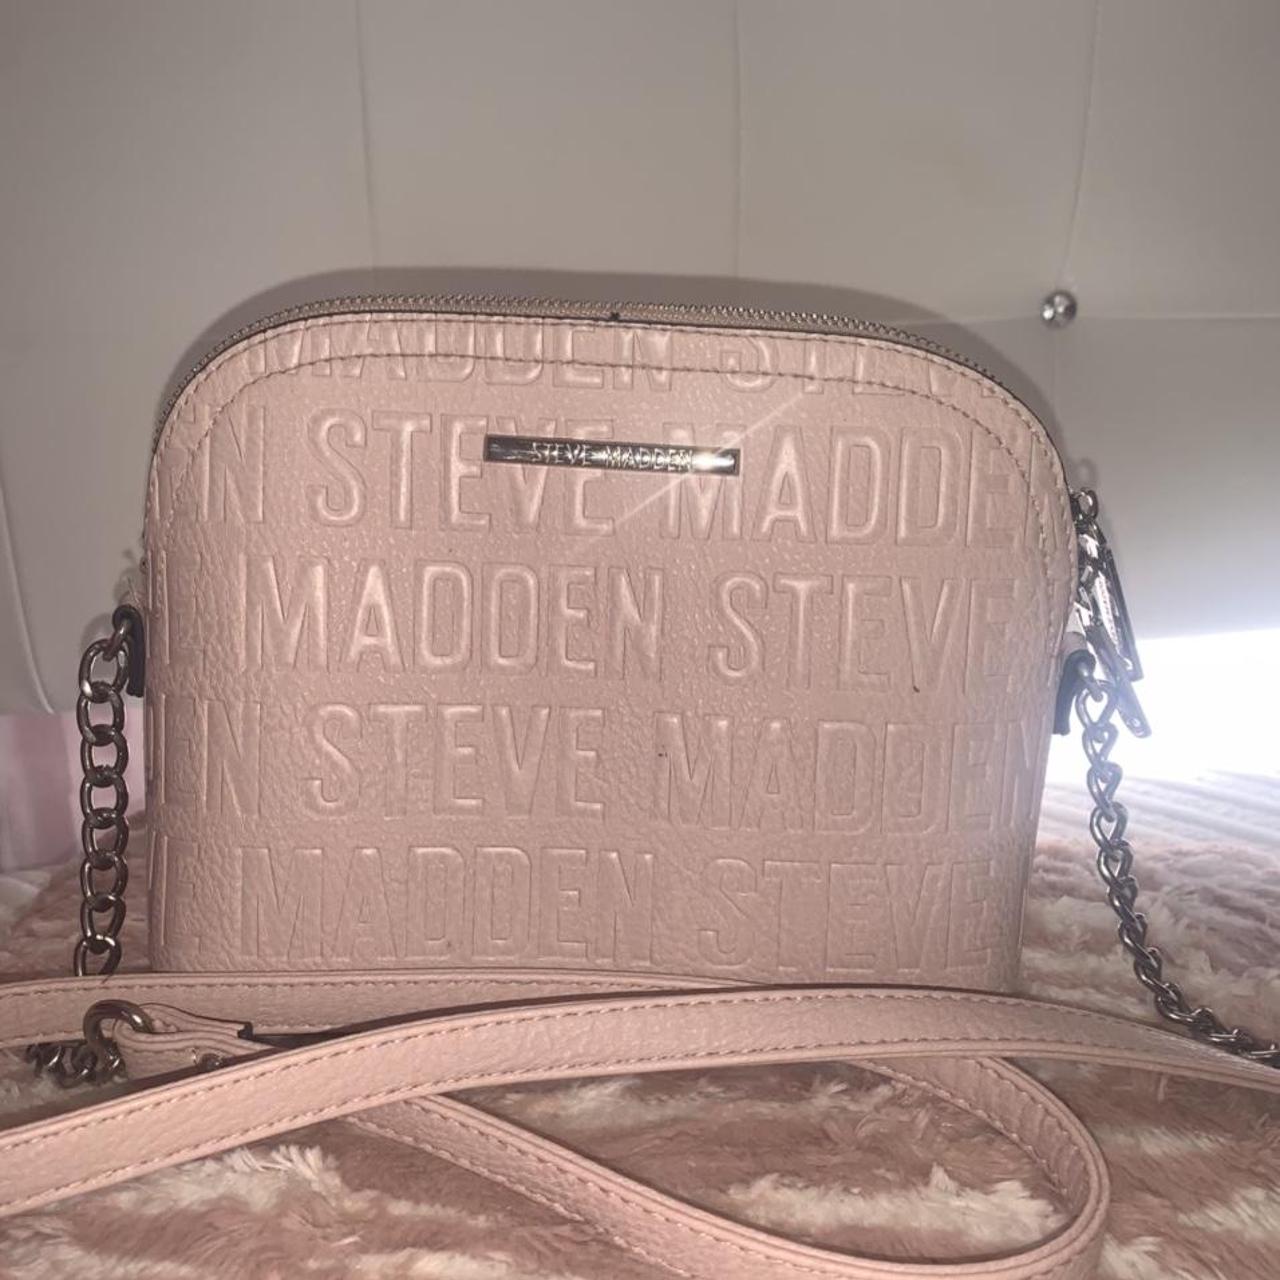 STEVE MADDEN Dome Crossbody bag Handbag purse Blush - Depop